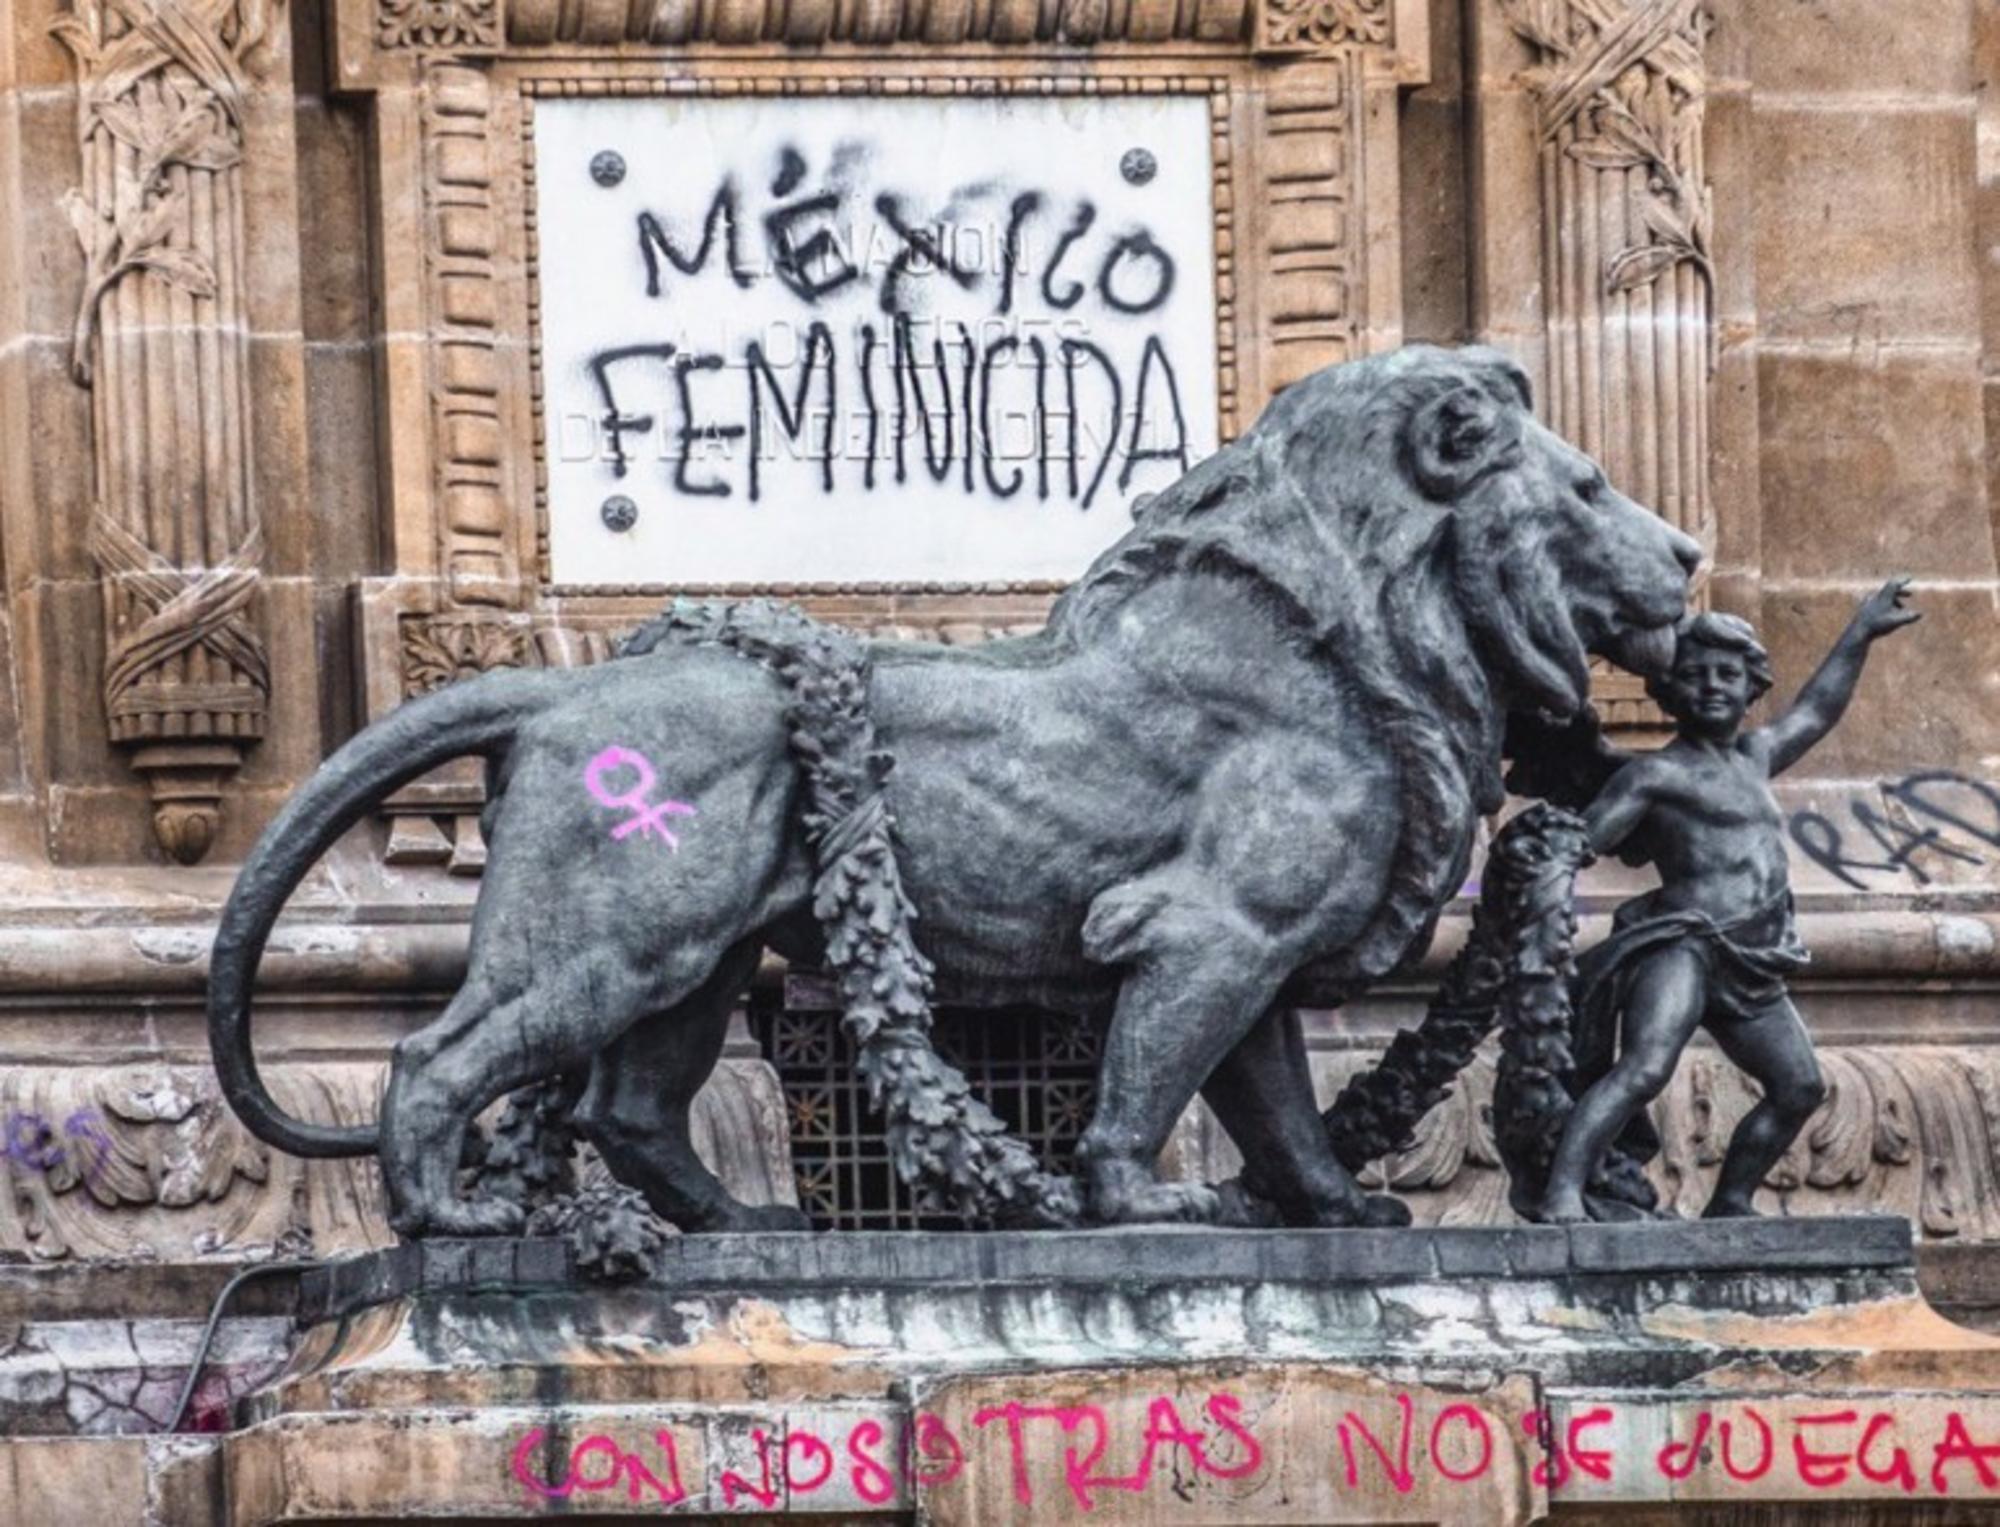 Mexico Feminicida